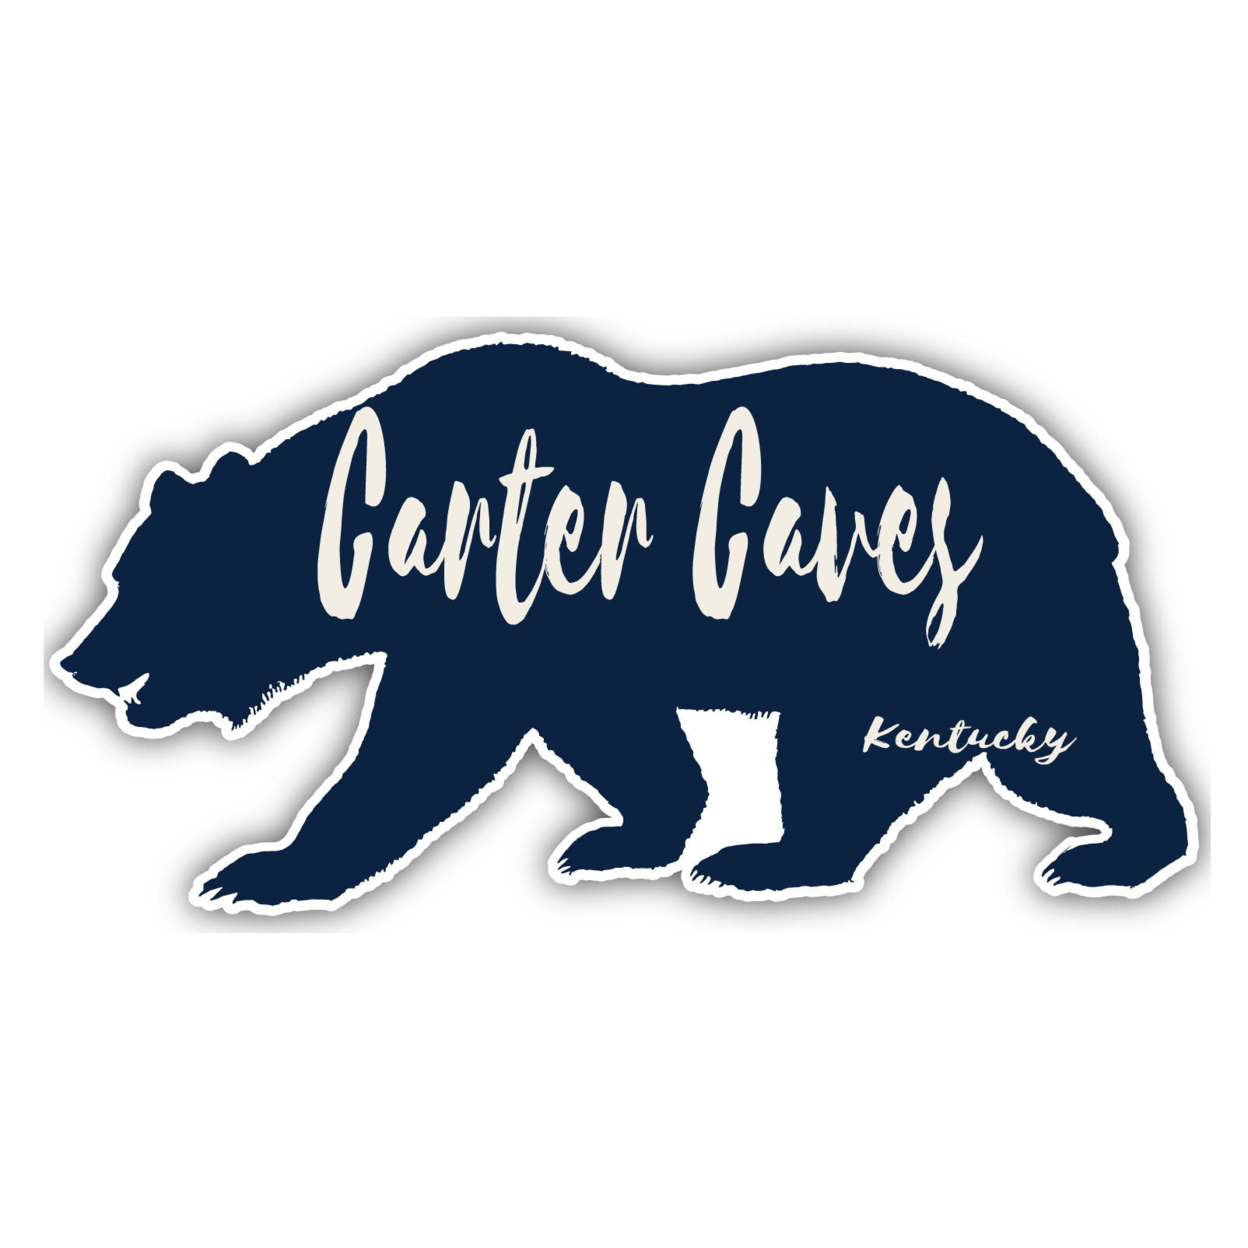 Carter Caves Kentucky Souvenir Decorative Stickers (Choose Theme And Size) - Single Unit, 8-Inch, Bear